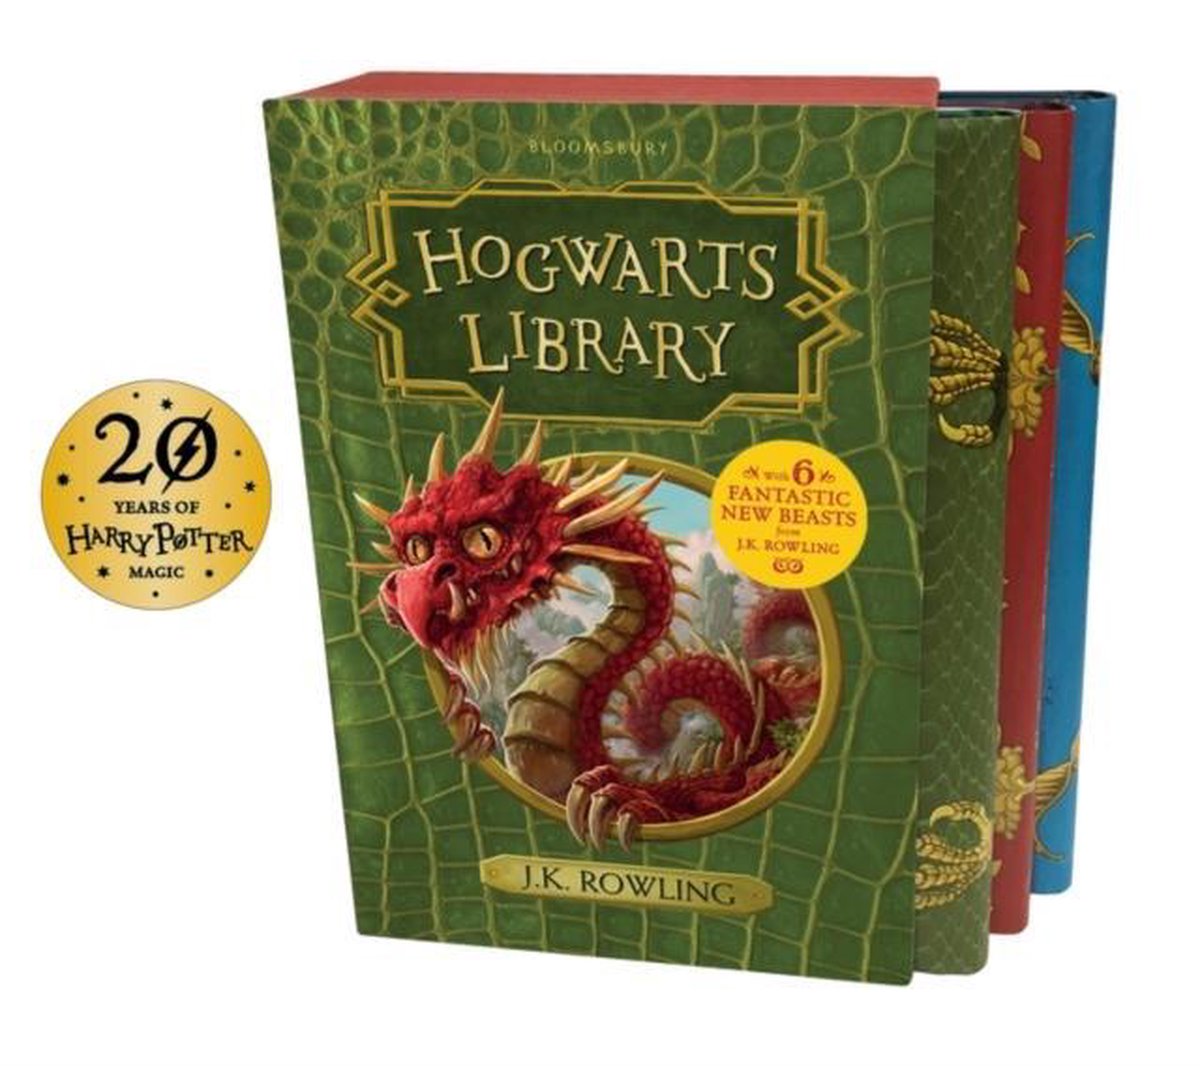 Hogwarts Library Box Set by J.K. Rowling